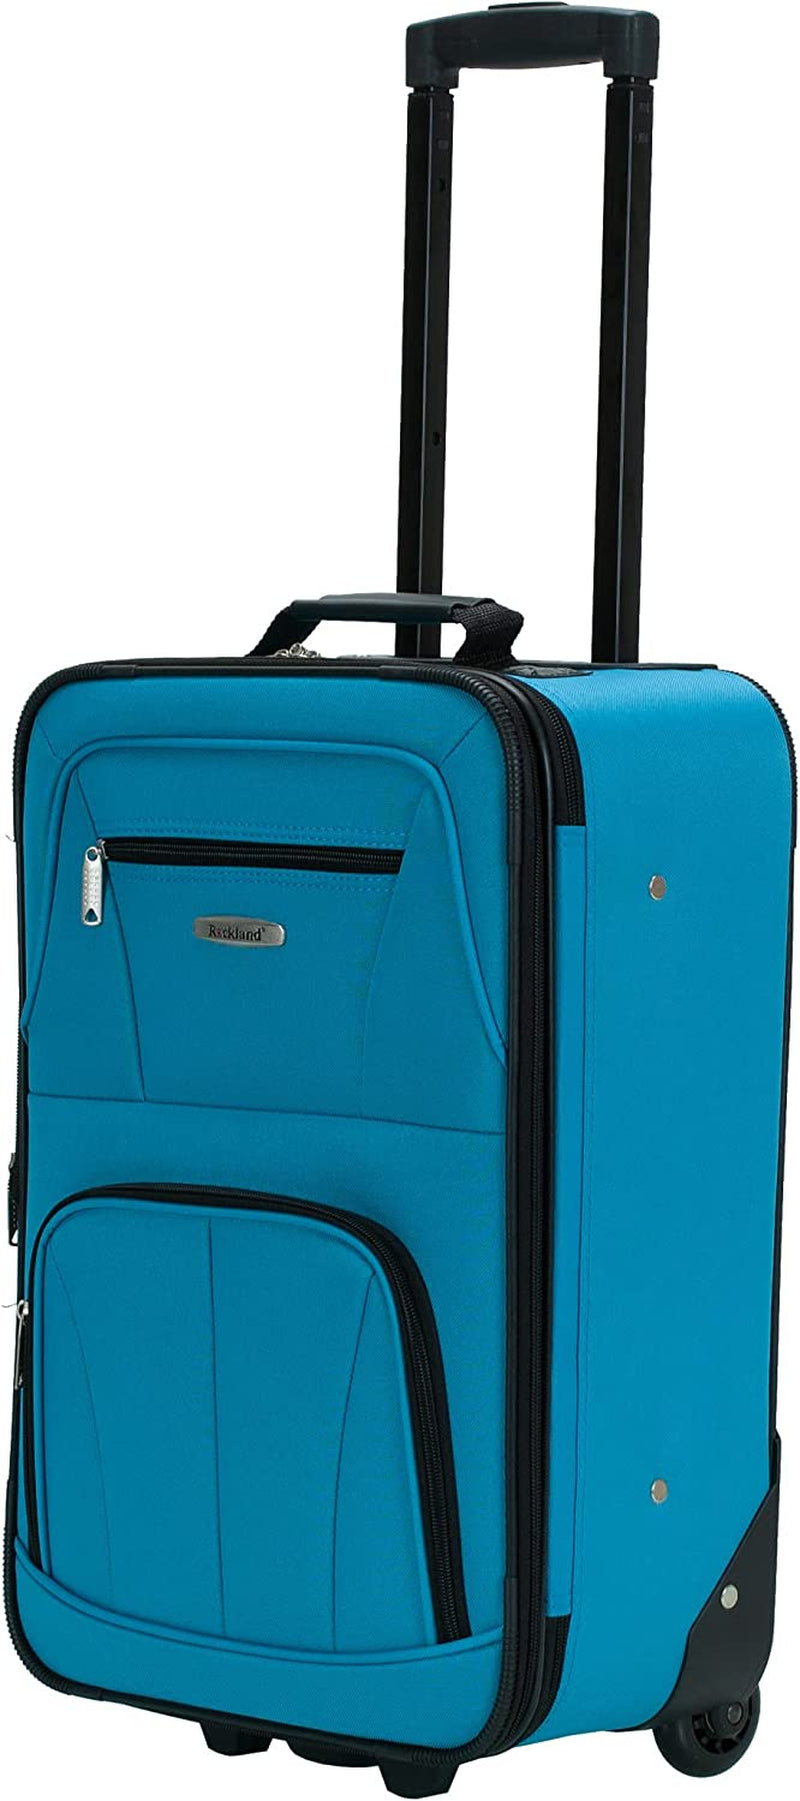 Rockland Journey 4-Piece Luggage